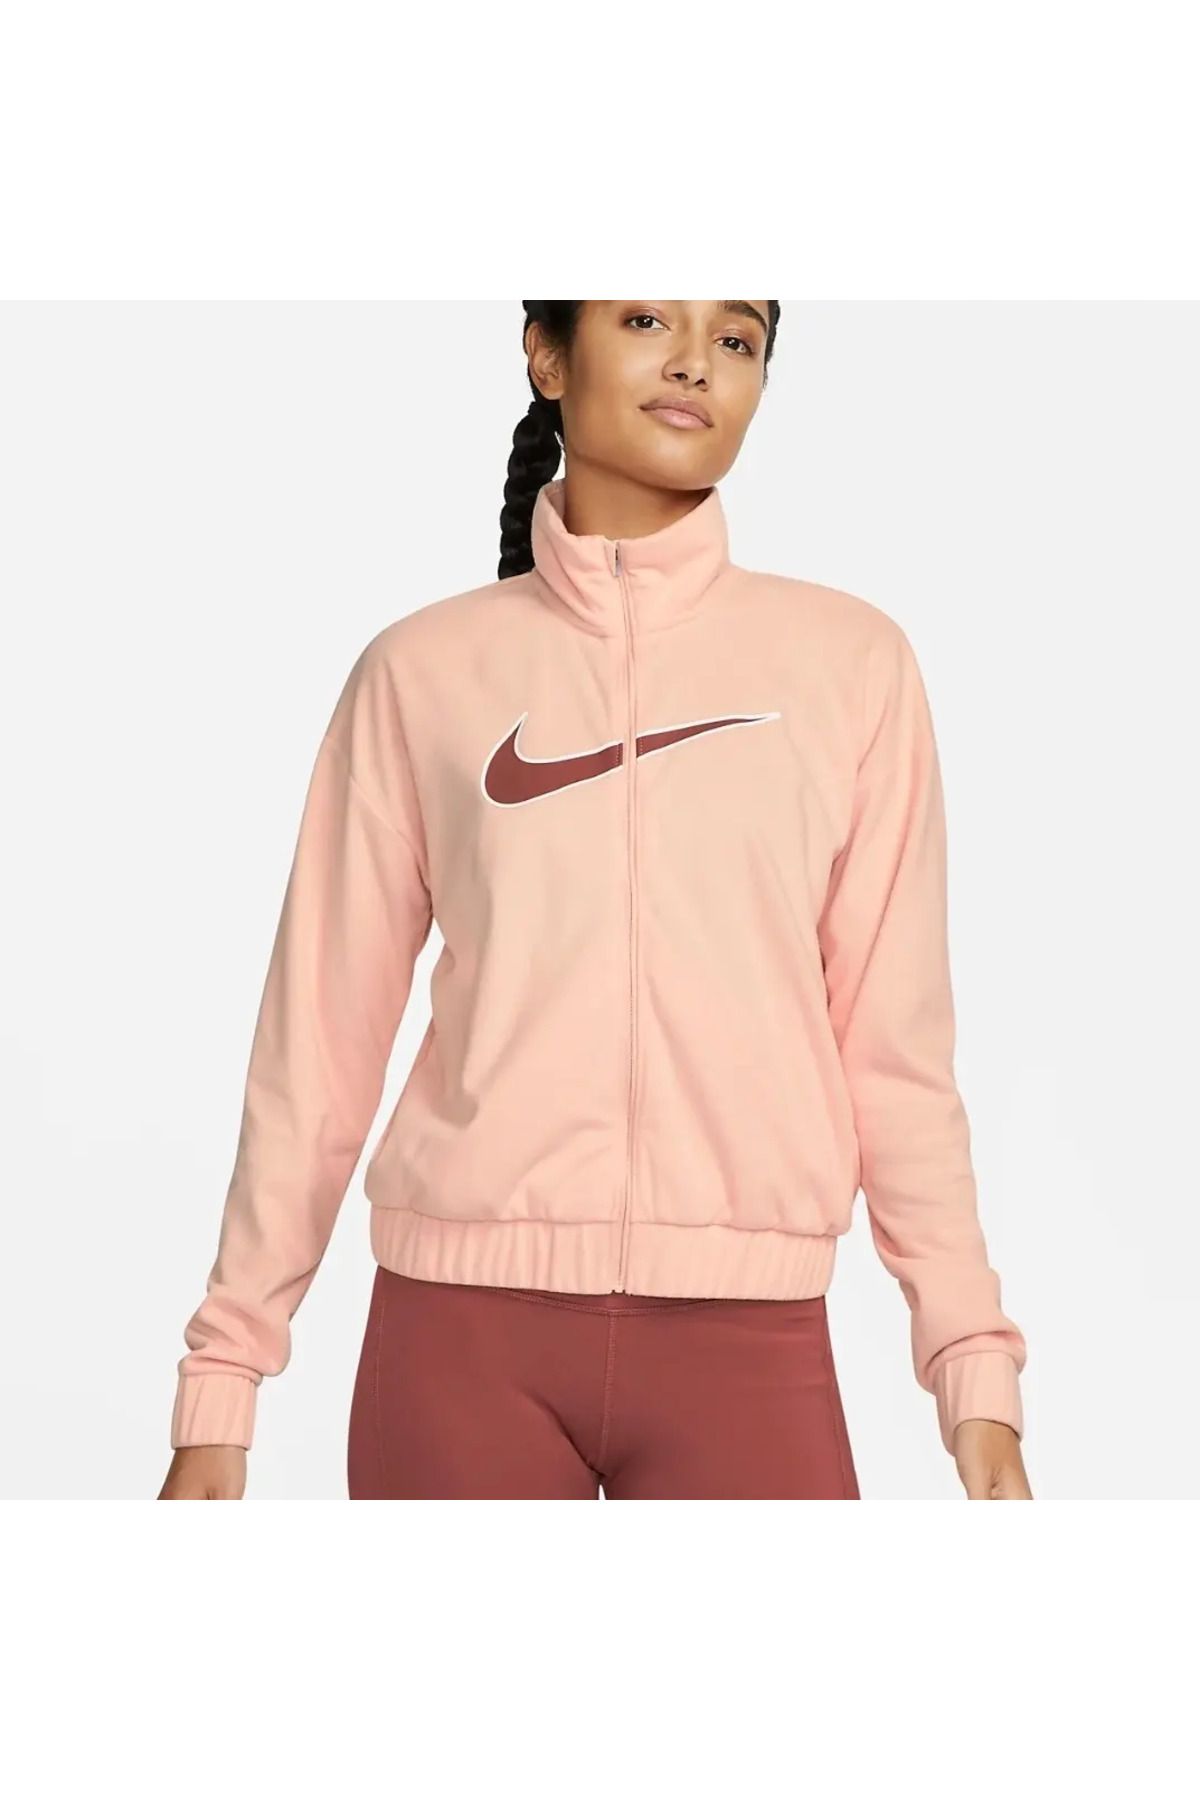 Nike Dri-Fit Swoosh Graphic Running Full-Zip Kadın Ceket ASLAN SPORT